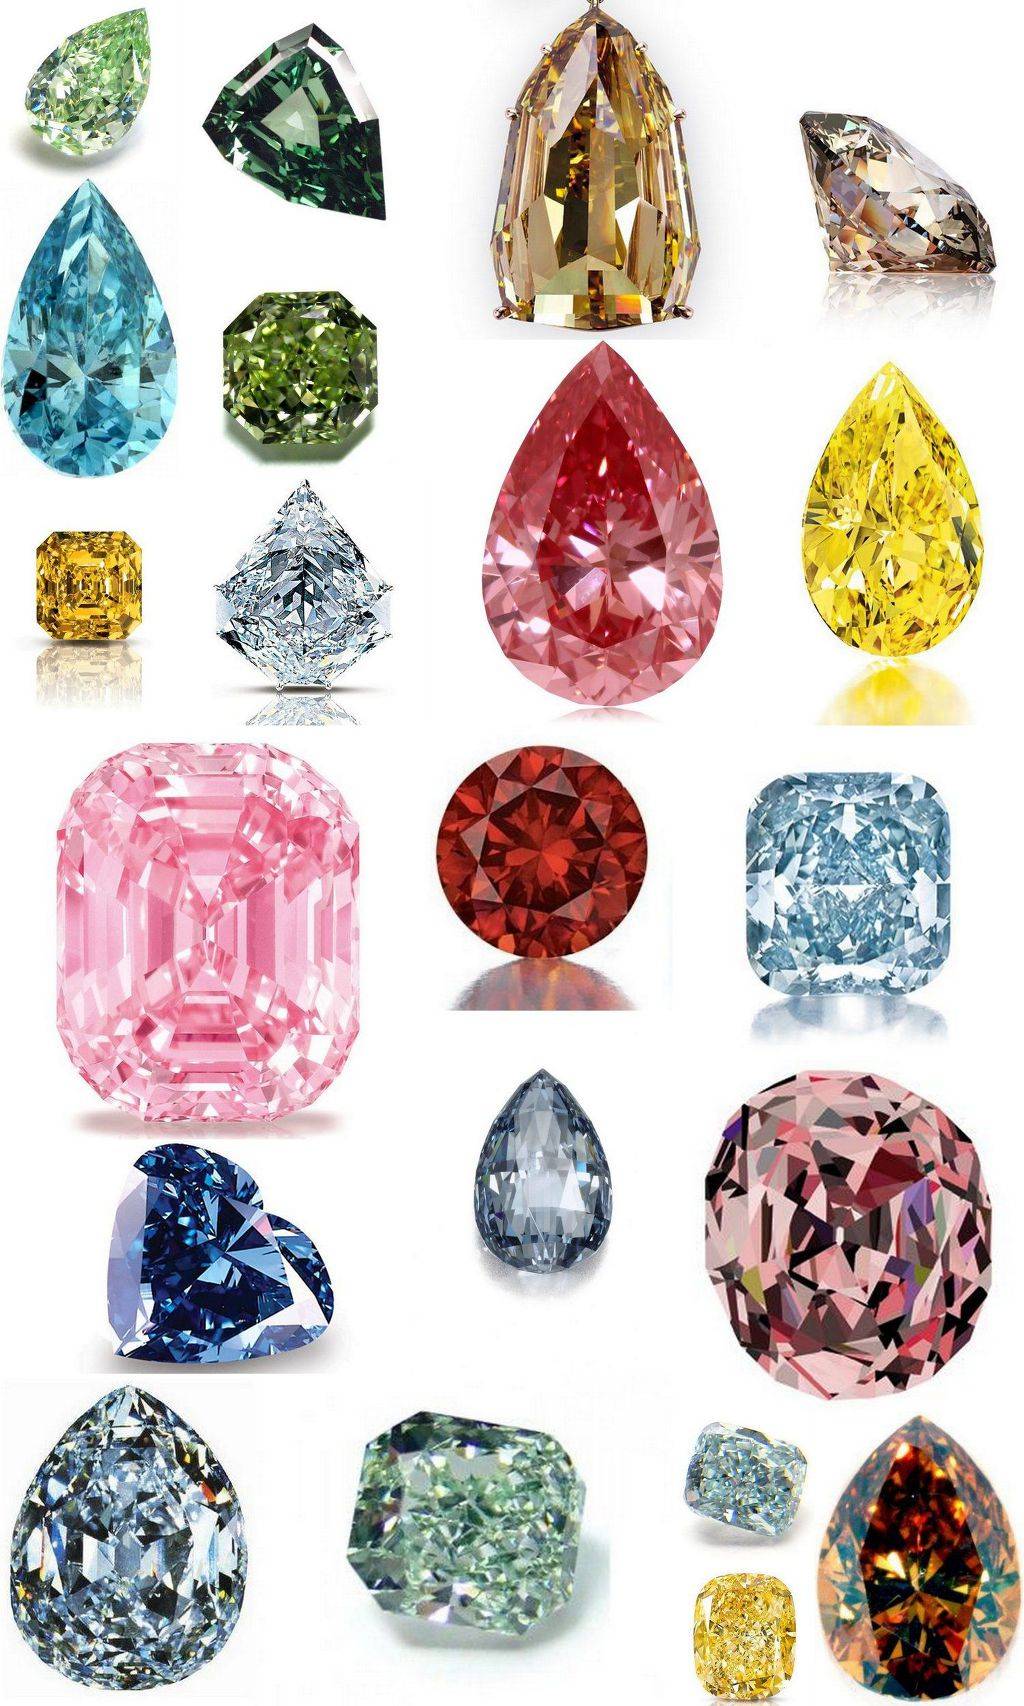 Tiffany&co를 다이아몬드의 왕으로 만들어준 다이아몬드 | 인스티즈